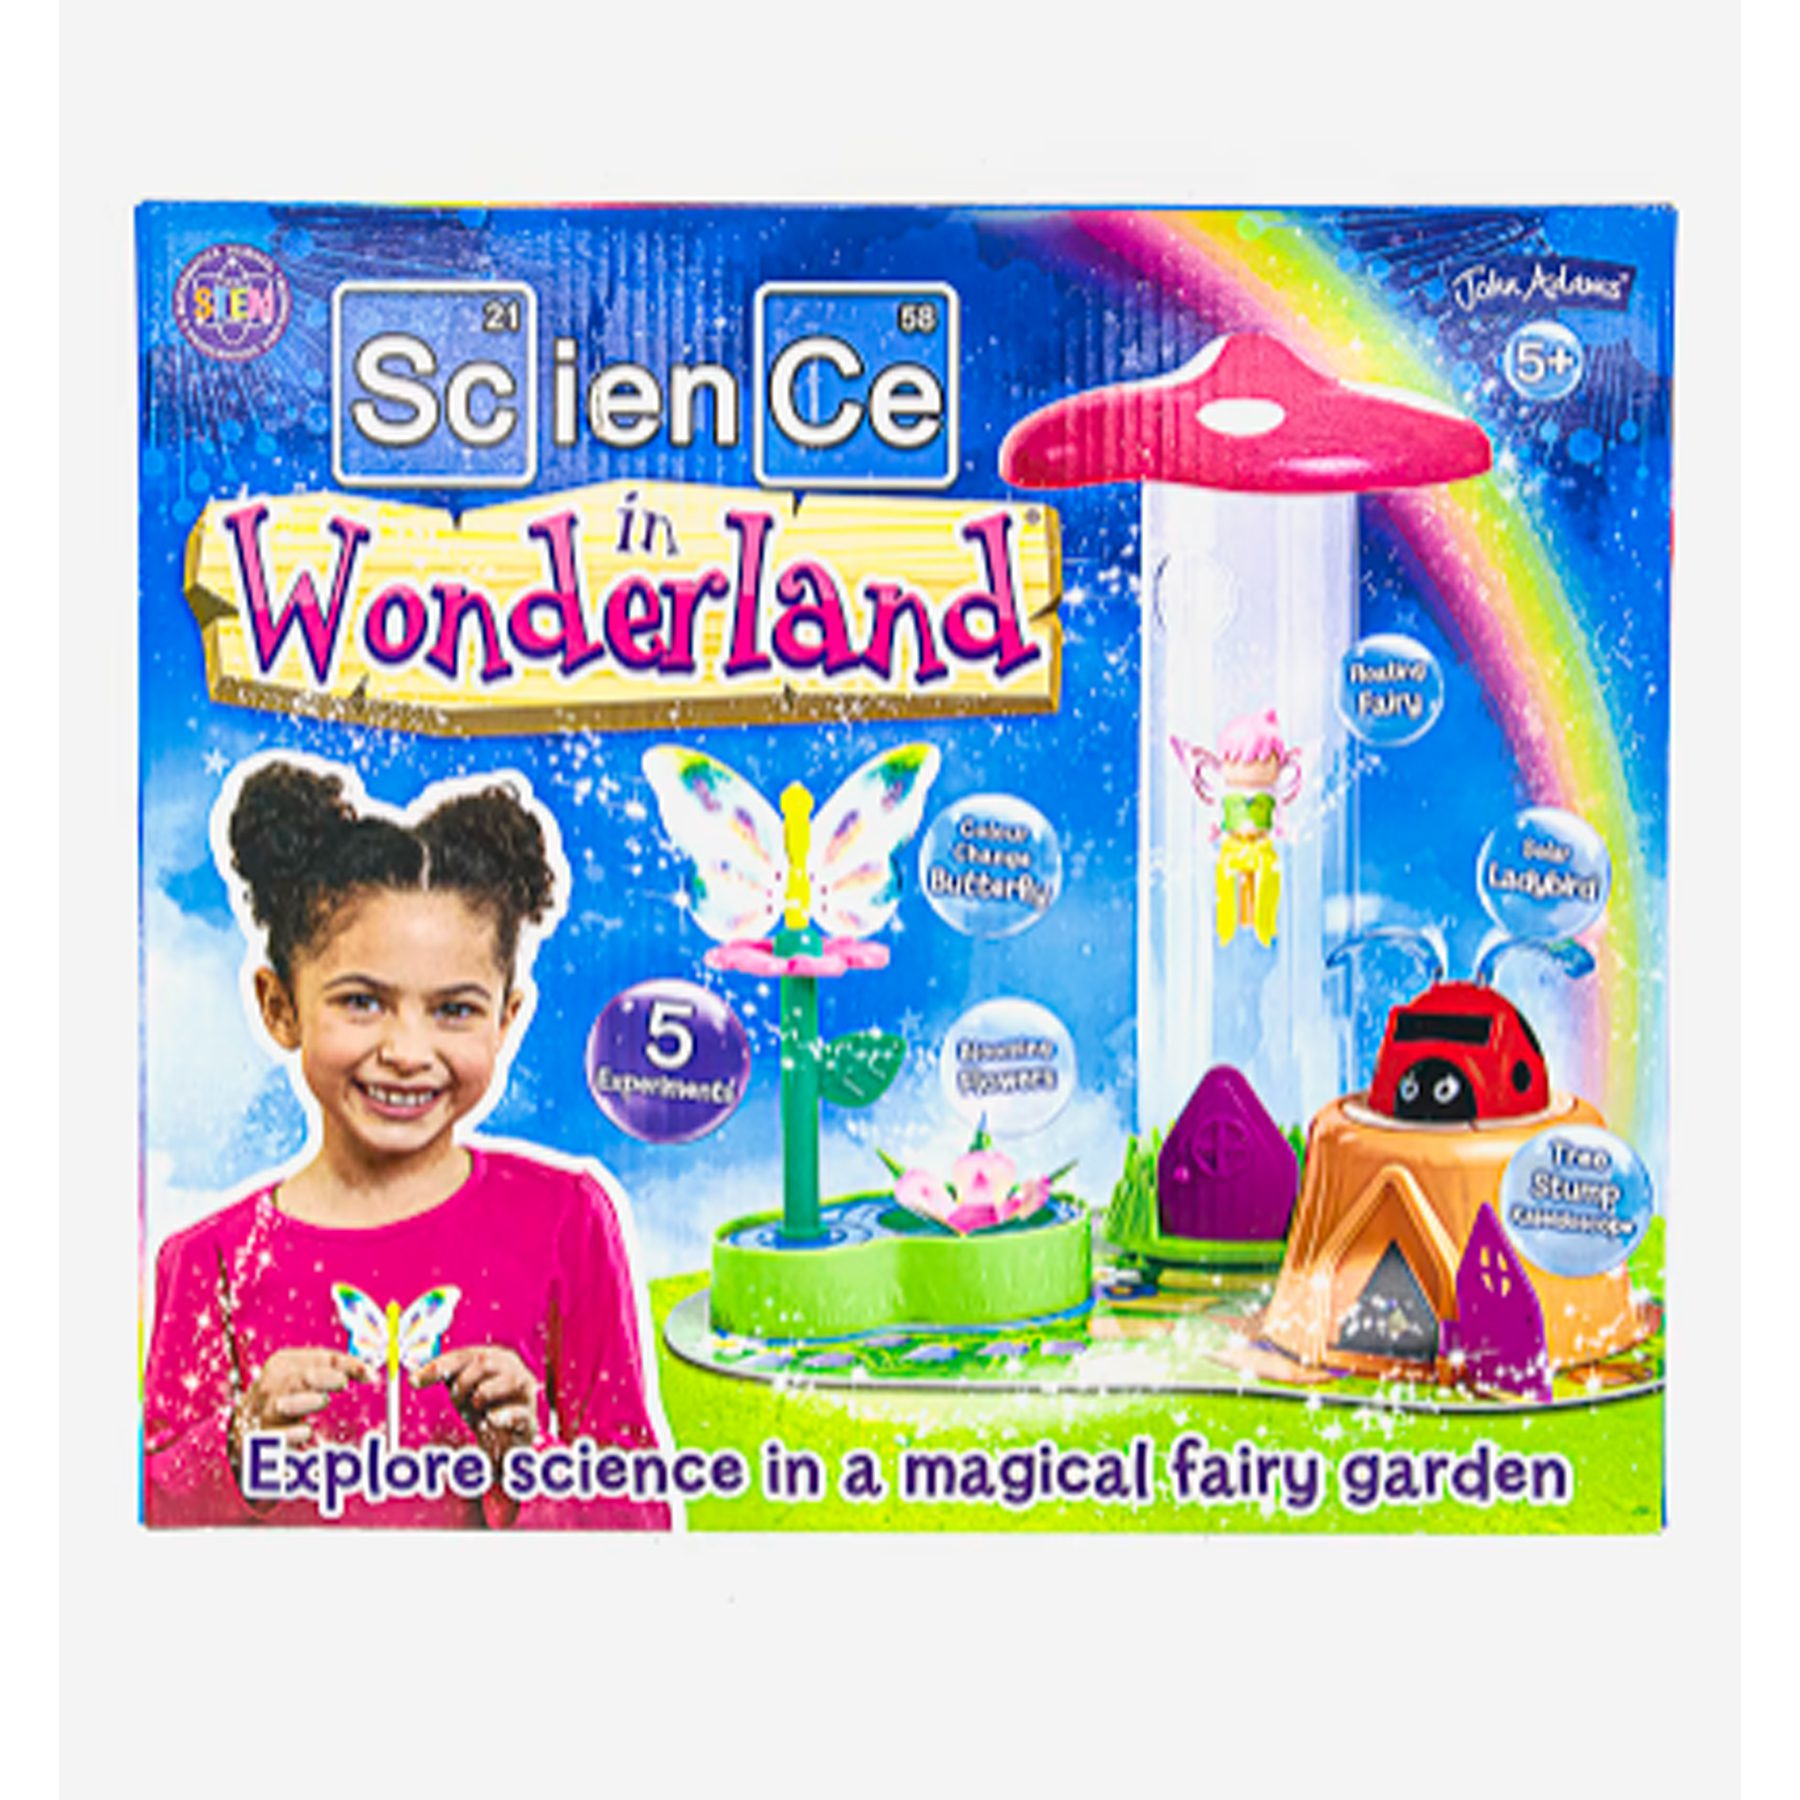 پک اسباب بازی علم در سرزمین عجایب John Adams Science in Wonderland